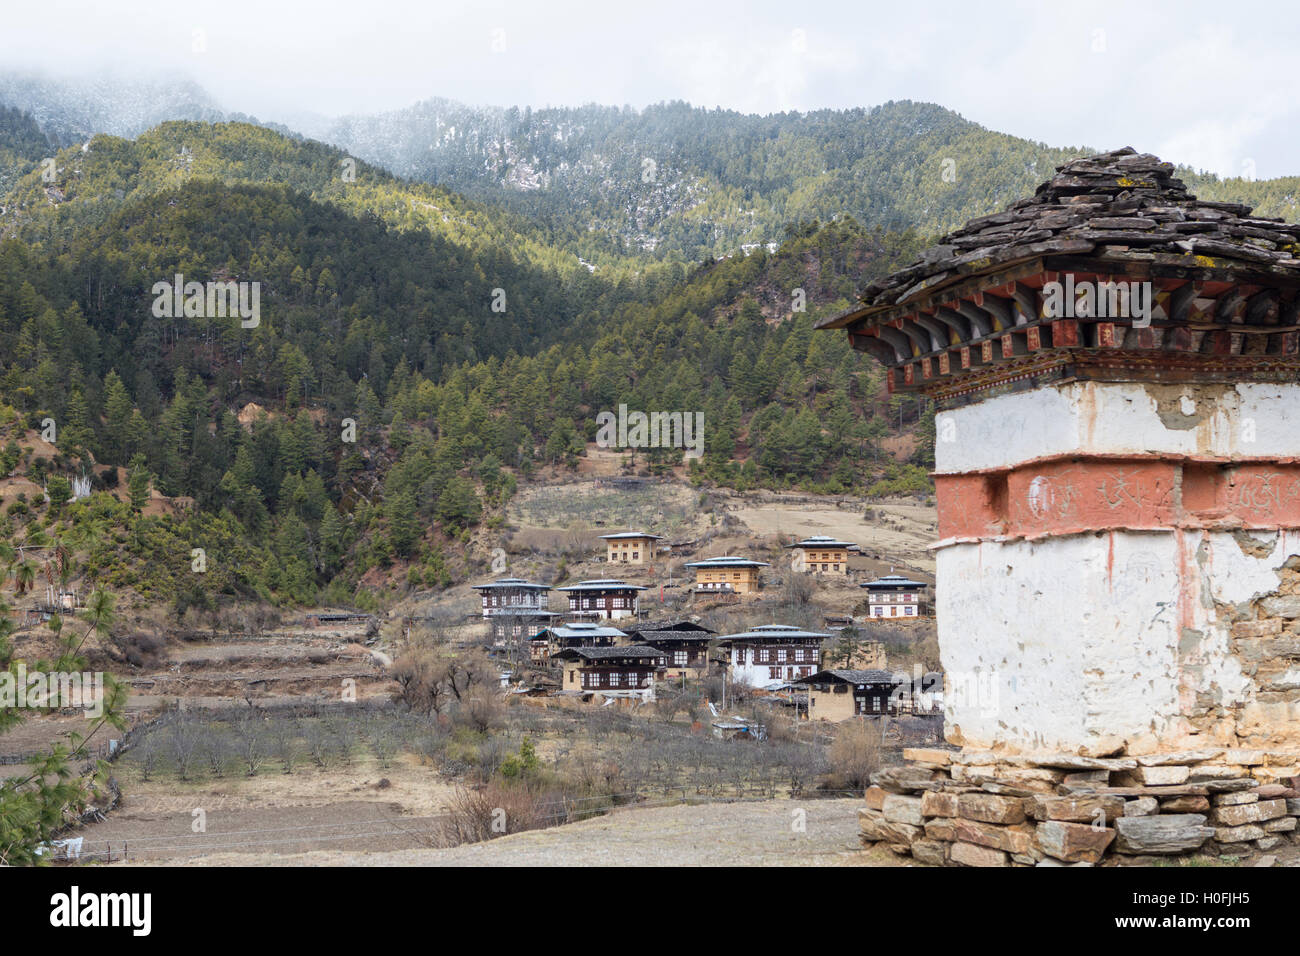 Farmhouses and farmland in the Haa Valley, Bhutan, winter Stock Photo